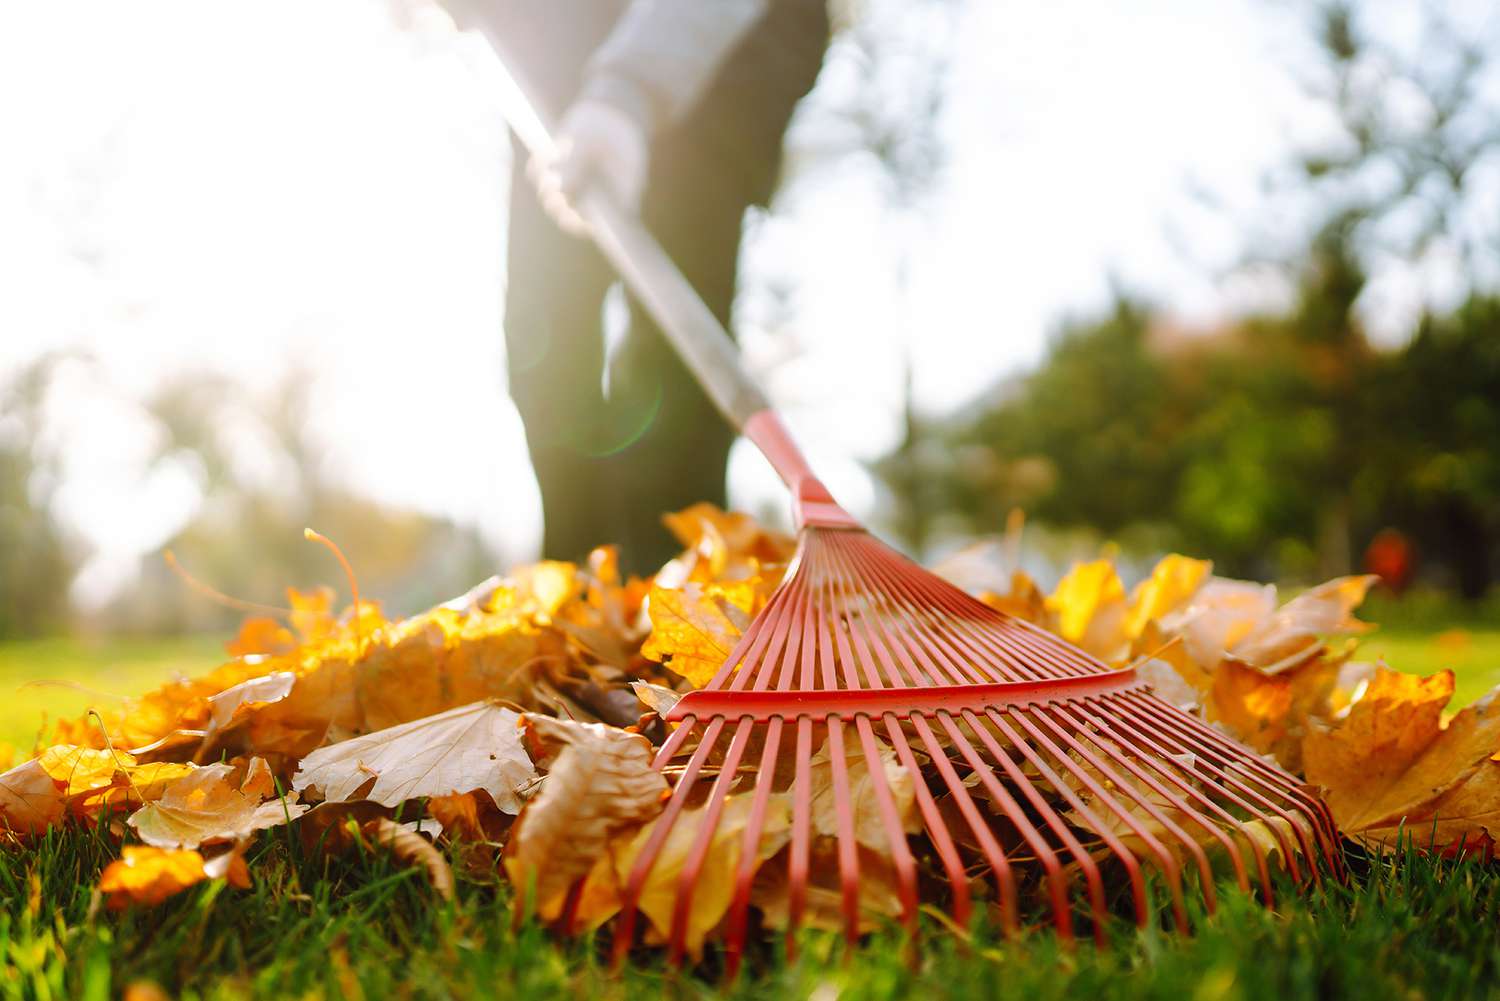 person raking autumn leaves on grass outdoors